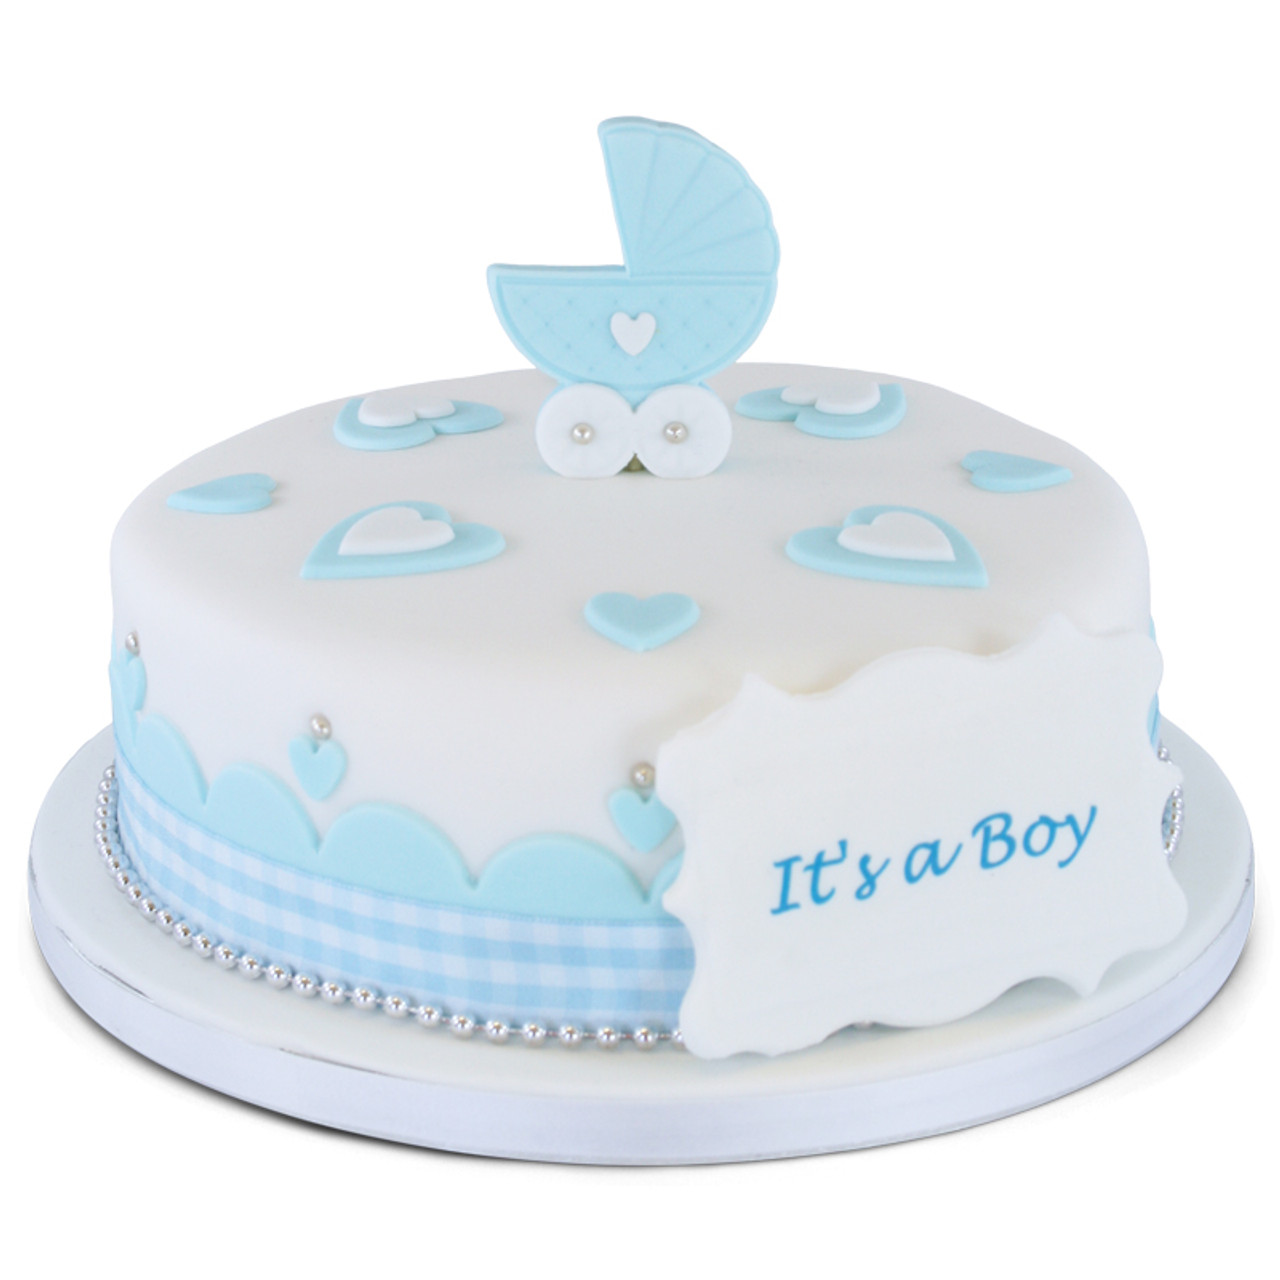 New Baby Cake | New Baby Cakes | The Cake Store